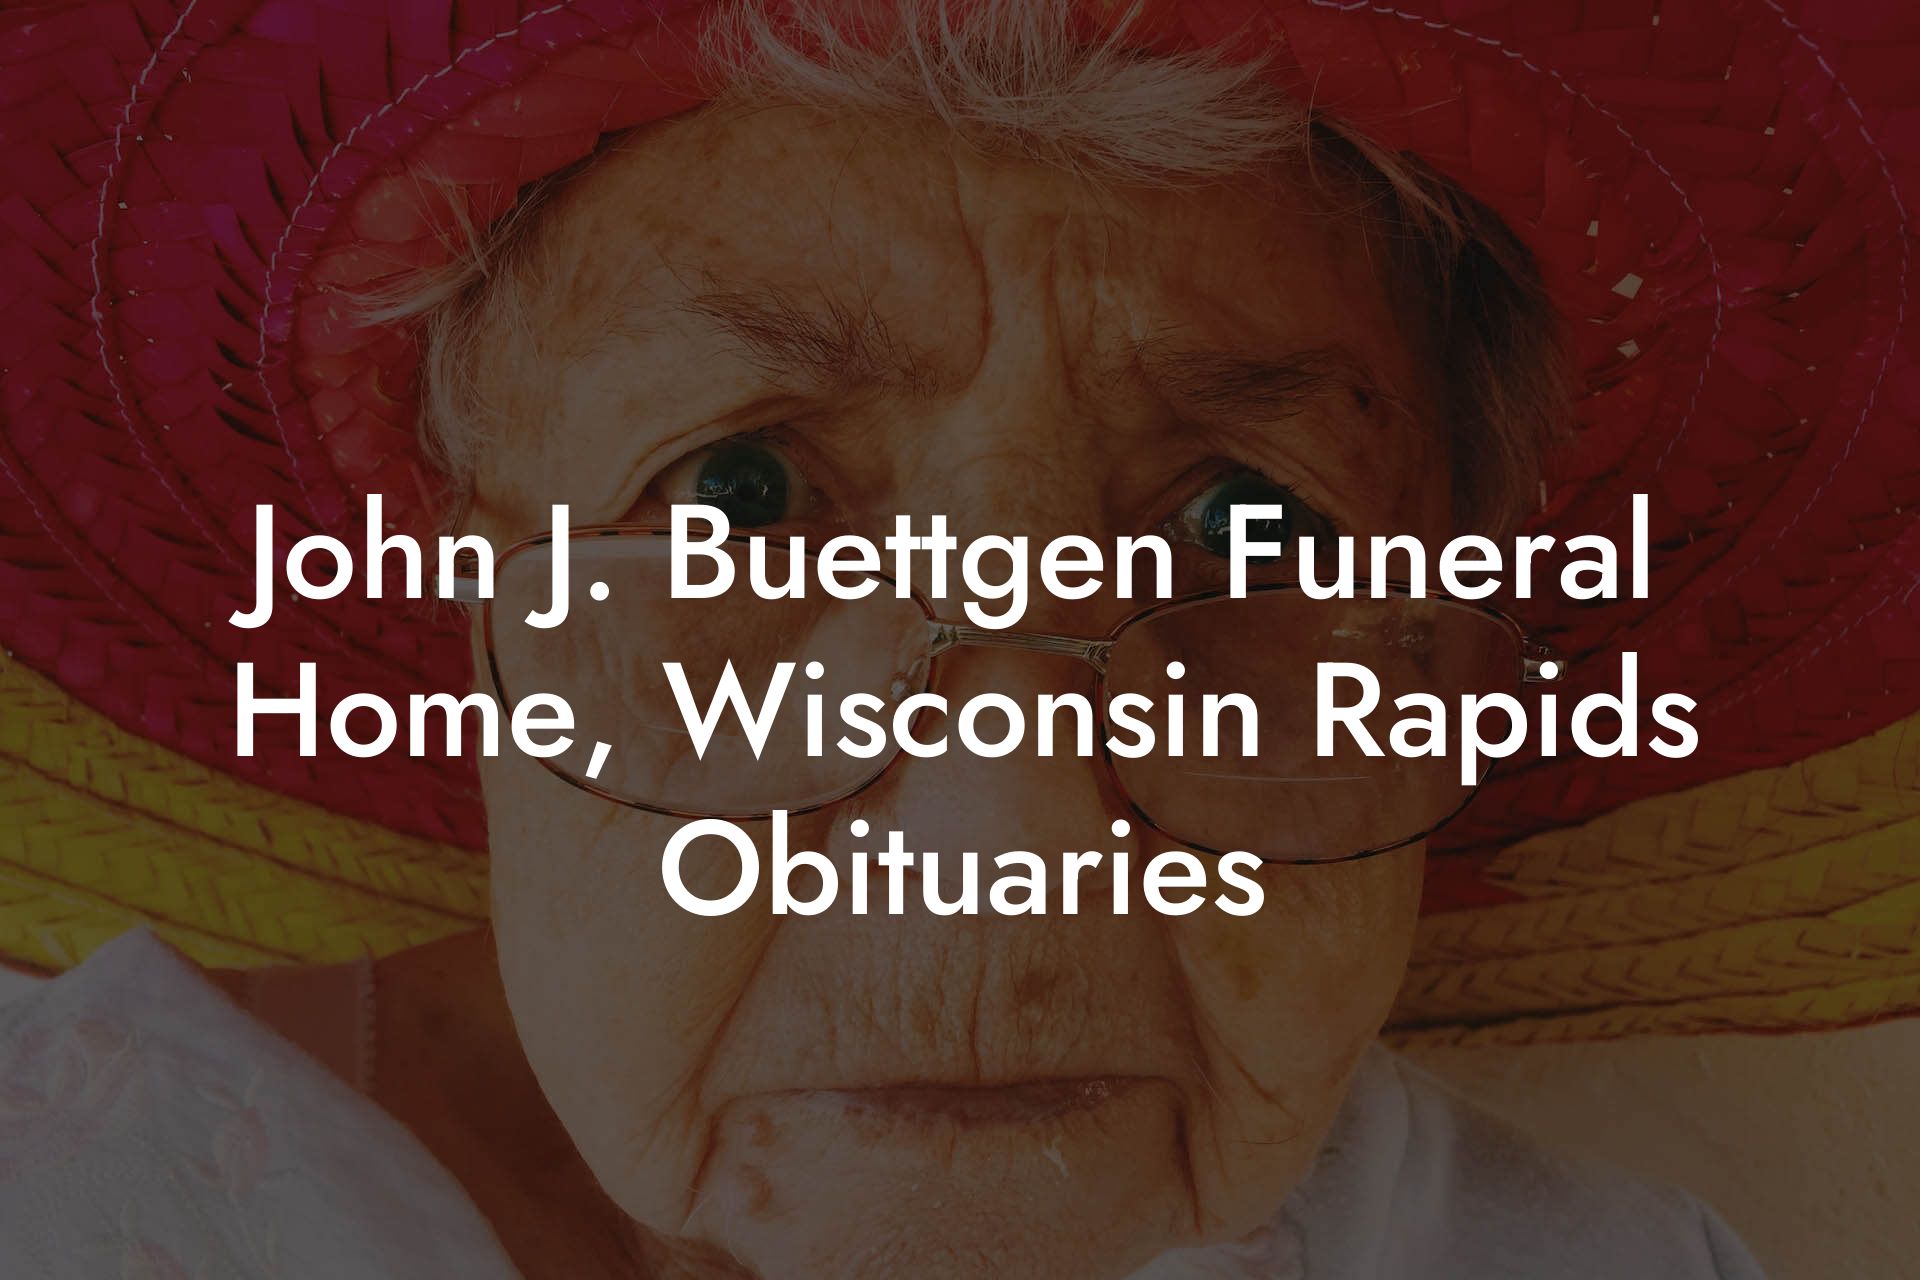 John J. Buettgen Funeral Home - Wisconsin Rapids Obituaries